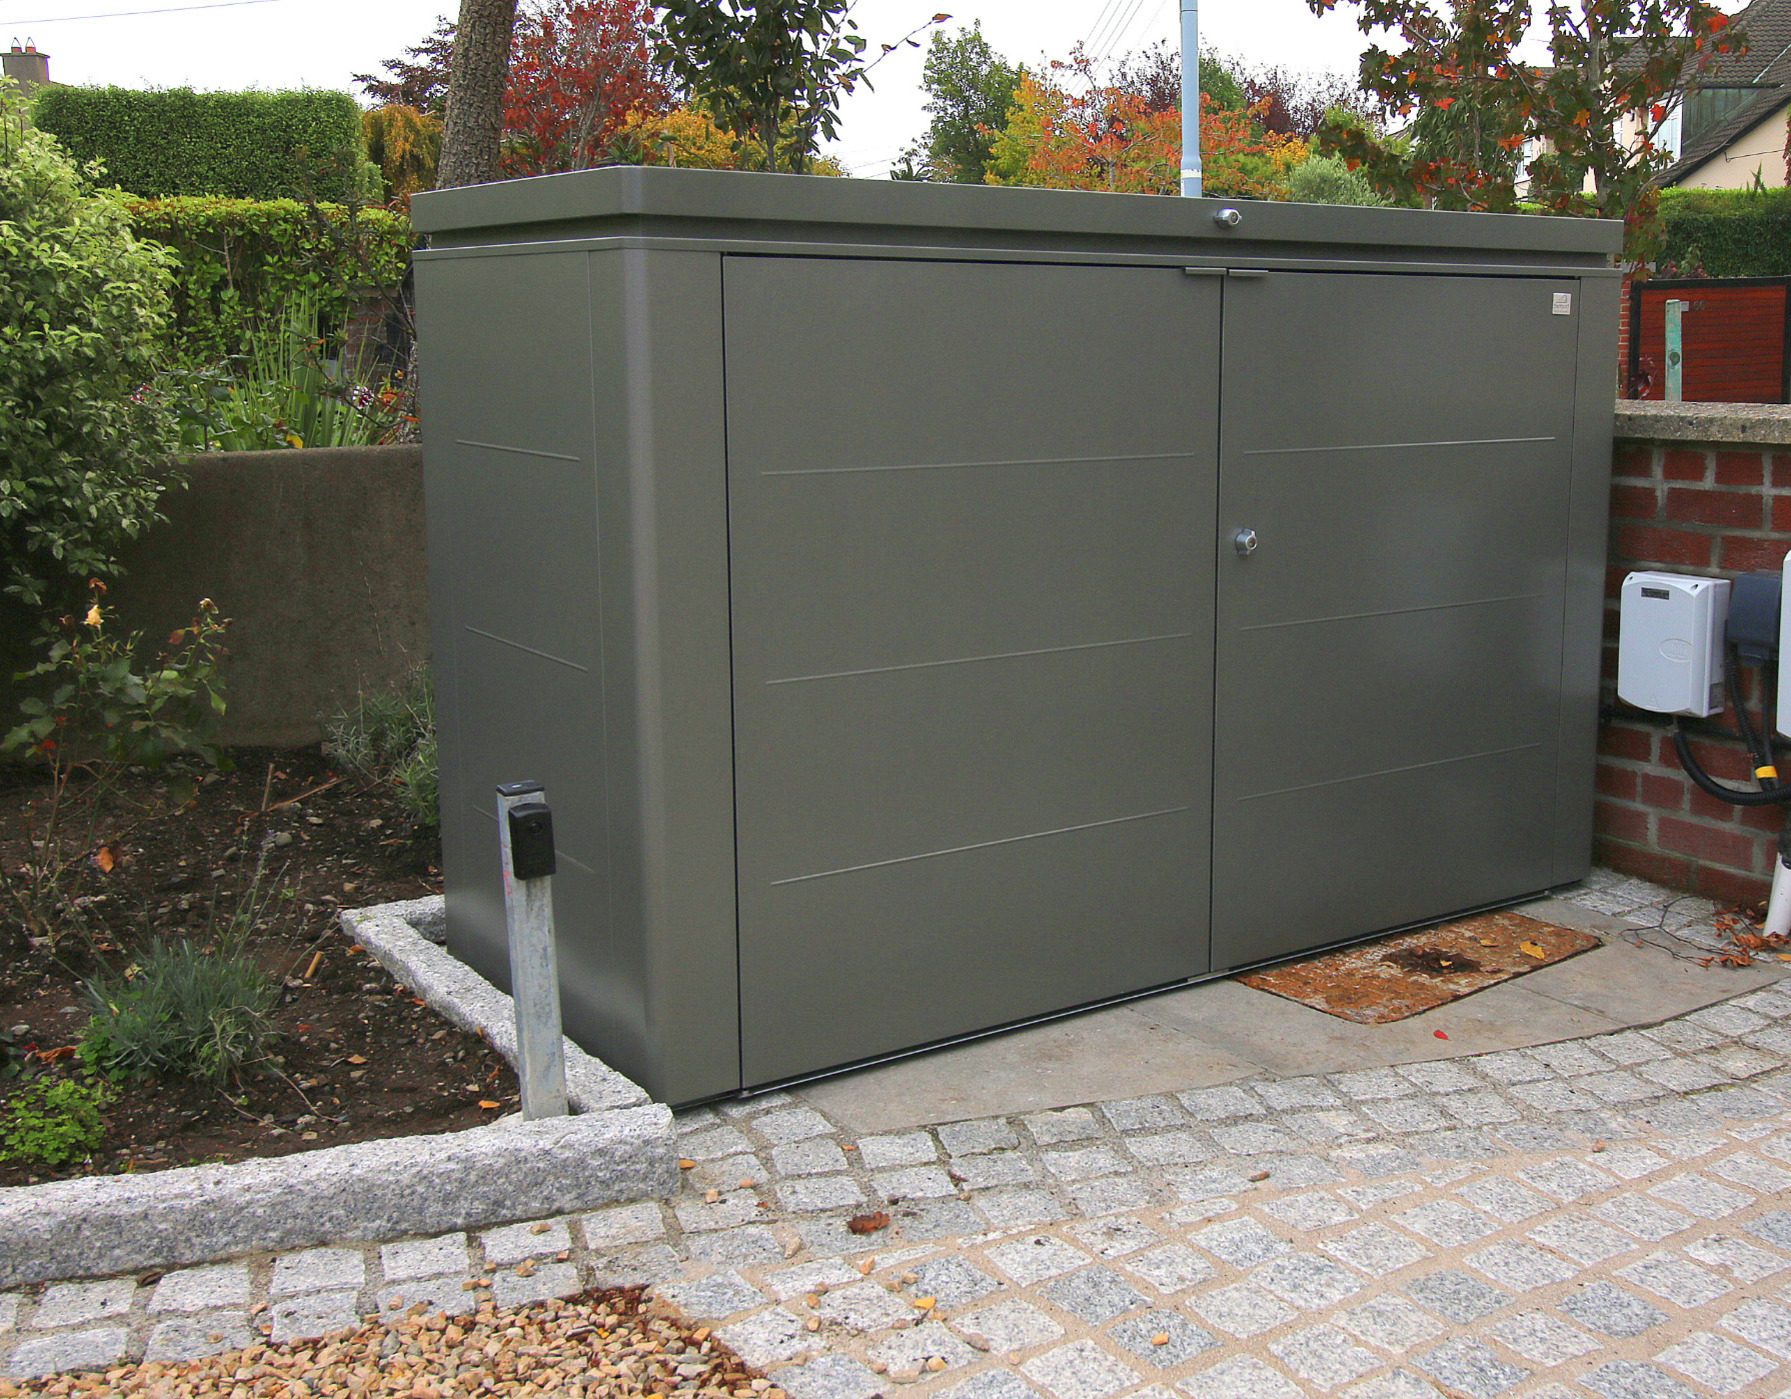 Biohort HighBoard 200 Wheelie Bin Storage Unit in Donnybrook, Dublin 4 | Owen Chubb Garden Landscapers